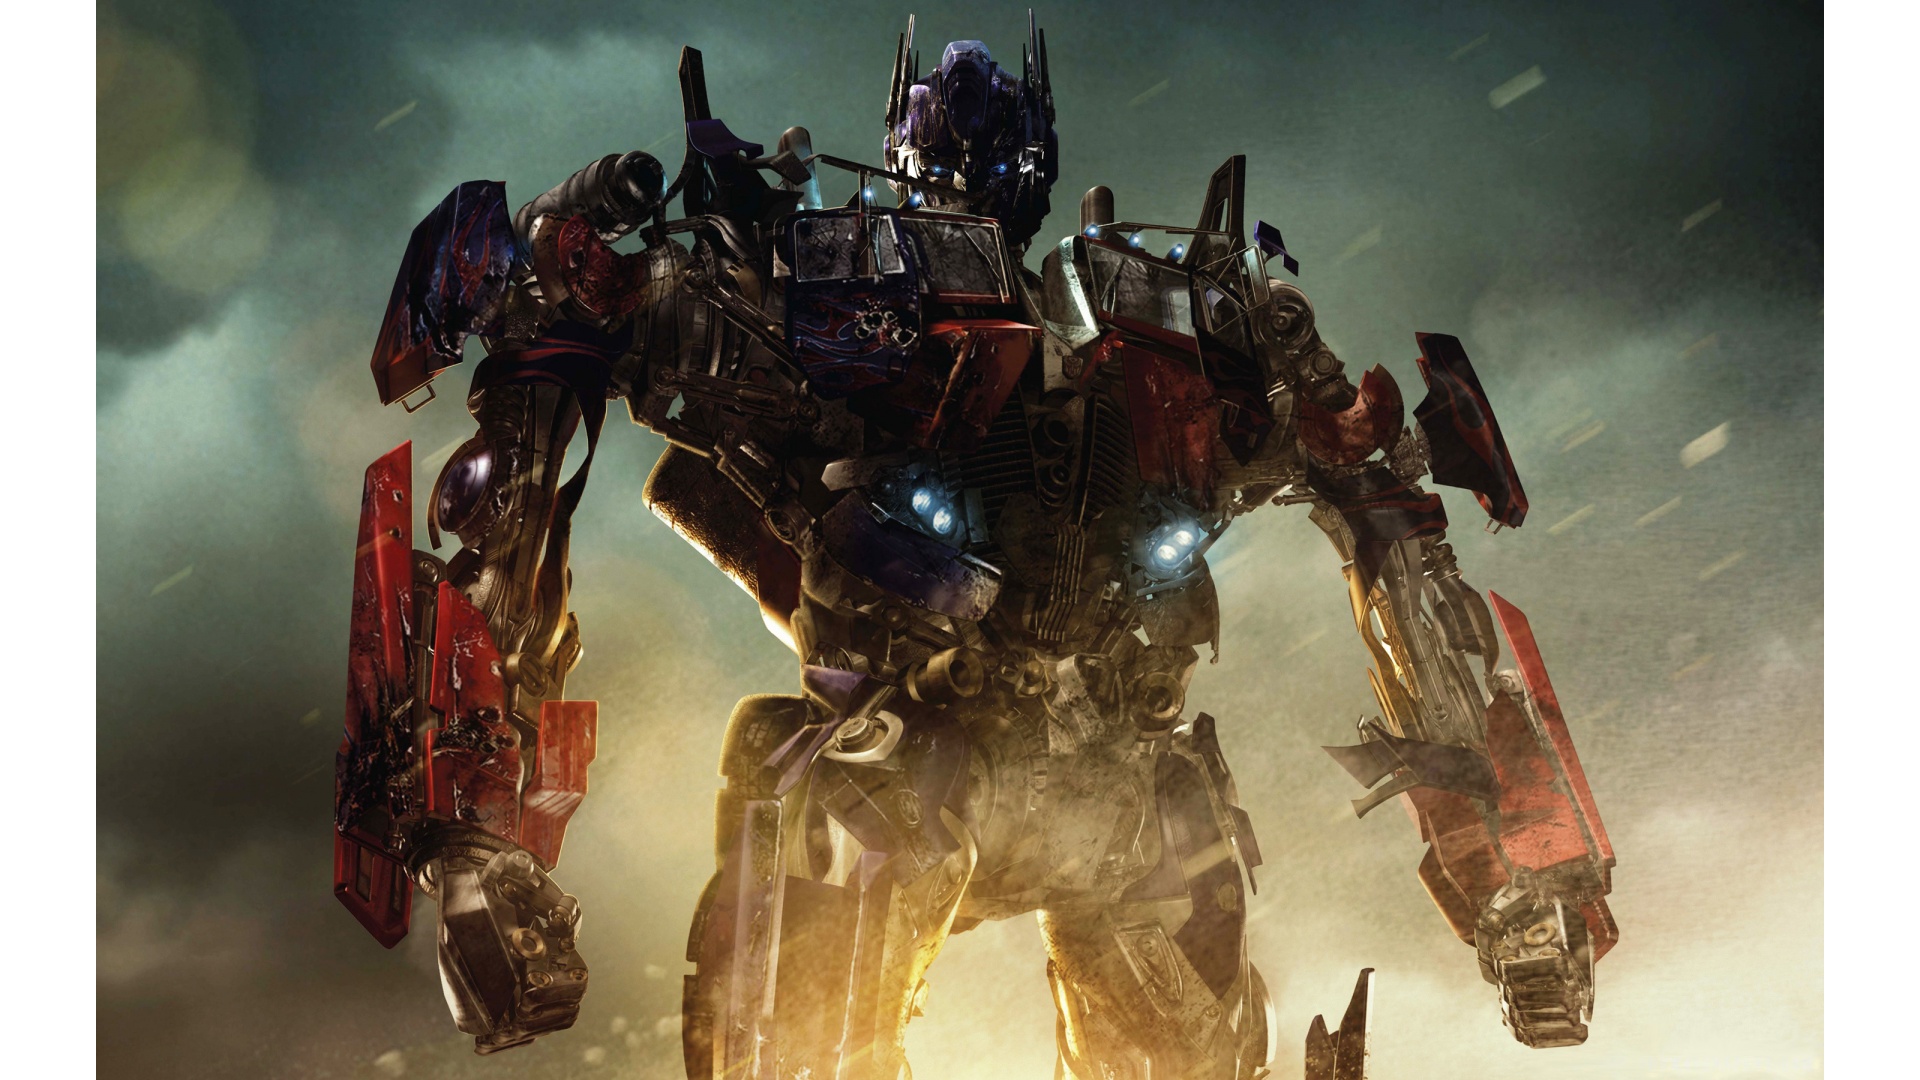  movie transformers 4 transformers film series june 2014 optimus prime